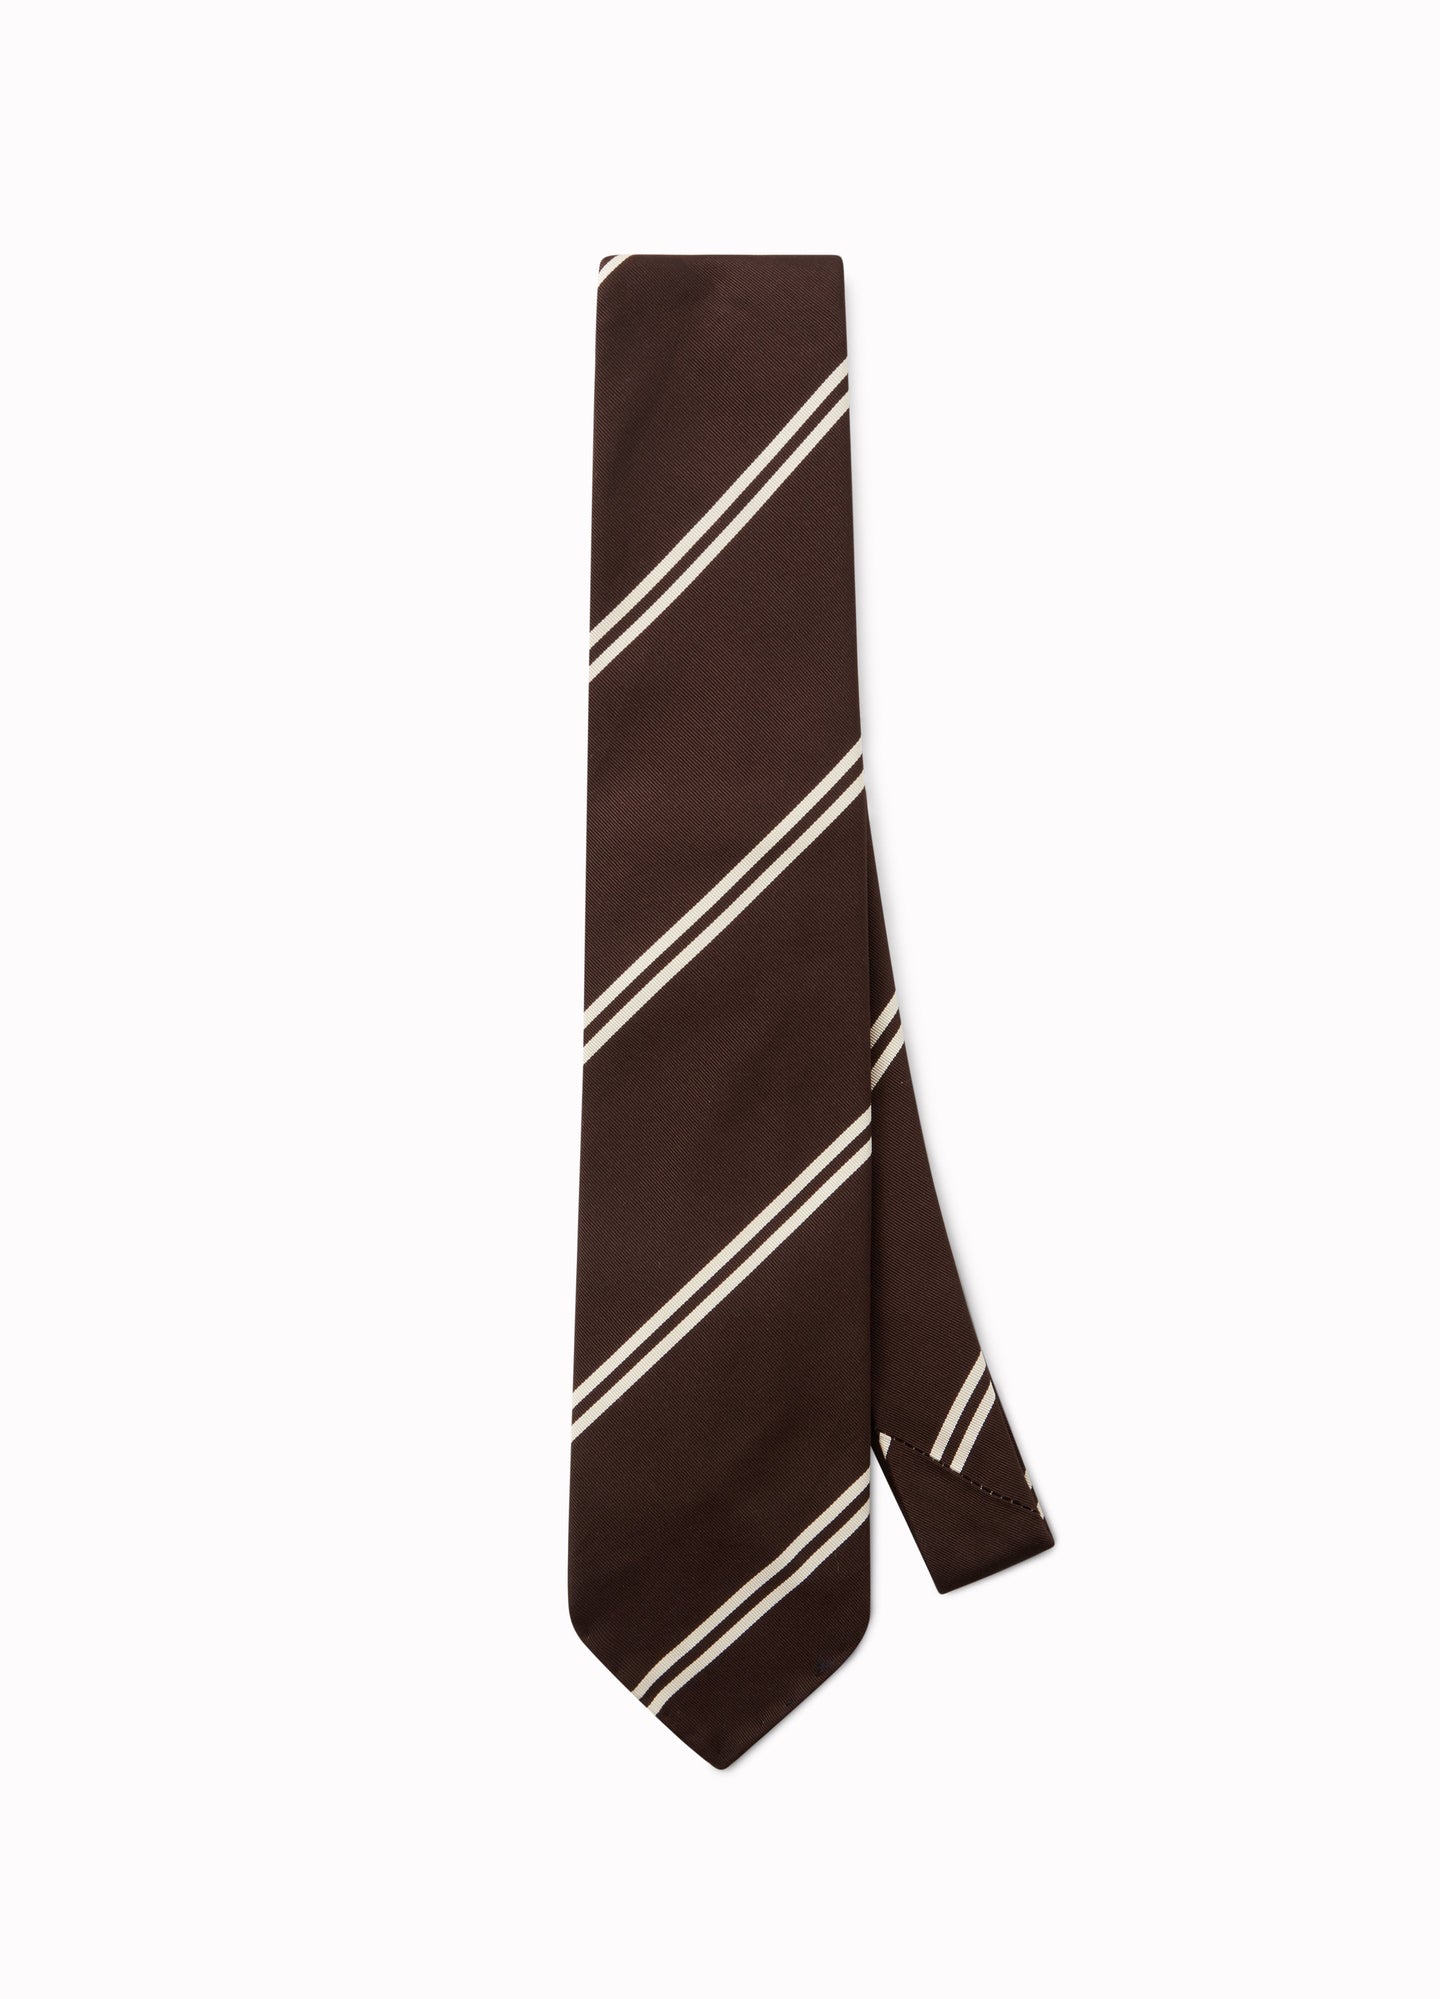 Mogador Stripe Tie - Brown Berg & Berg